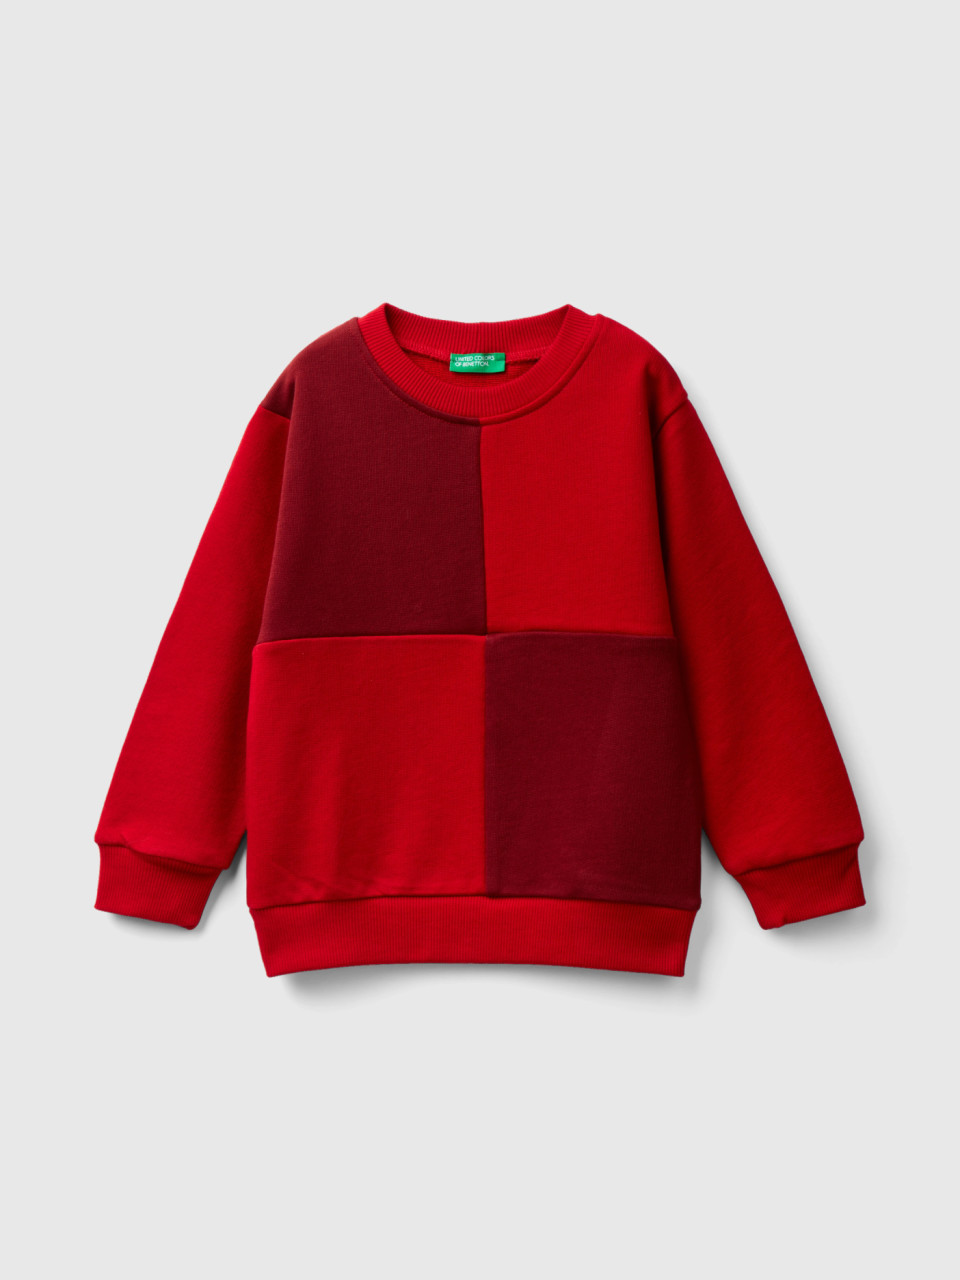 Benetton, Sweatshirt With Maxi Check, Red, Kids